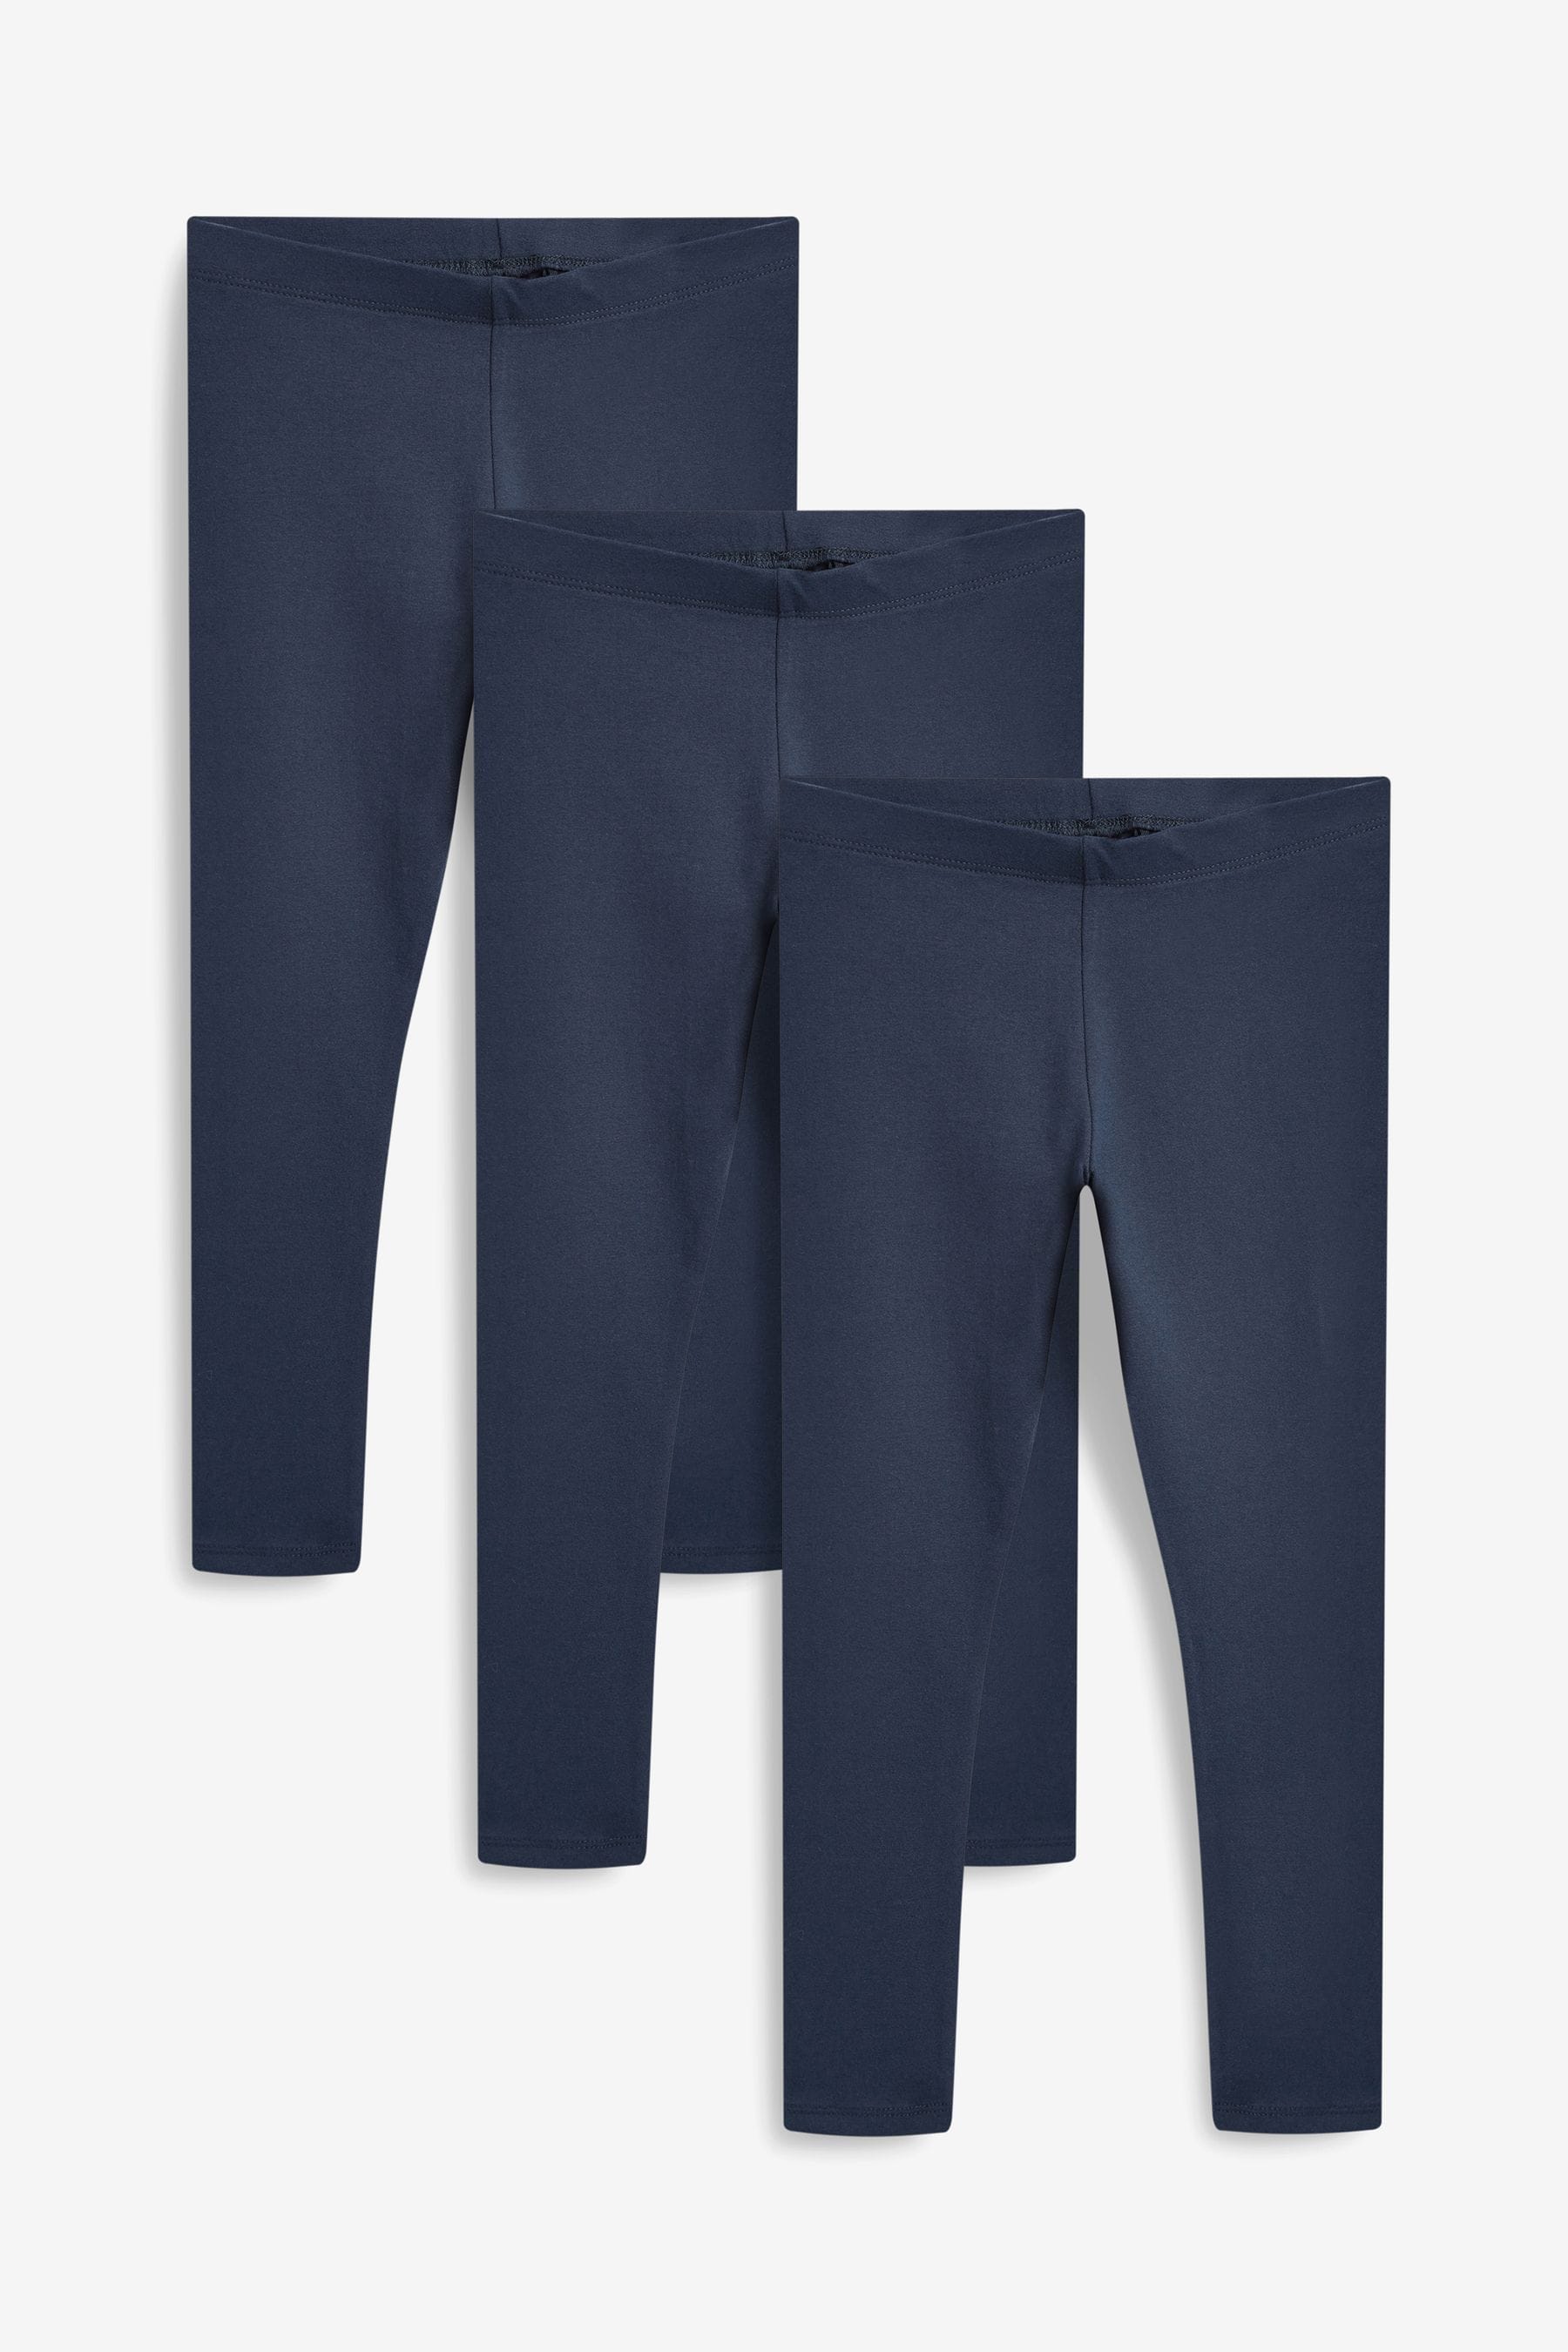 Buy LilPicks Kids Blue Cotton Printed Leggings for Girls Clothing Online @  Tata CLiQ